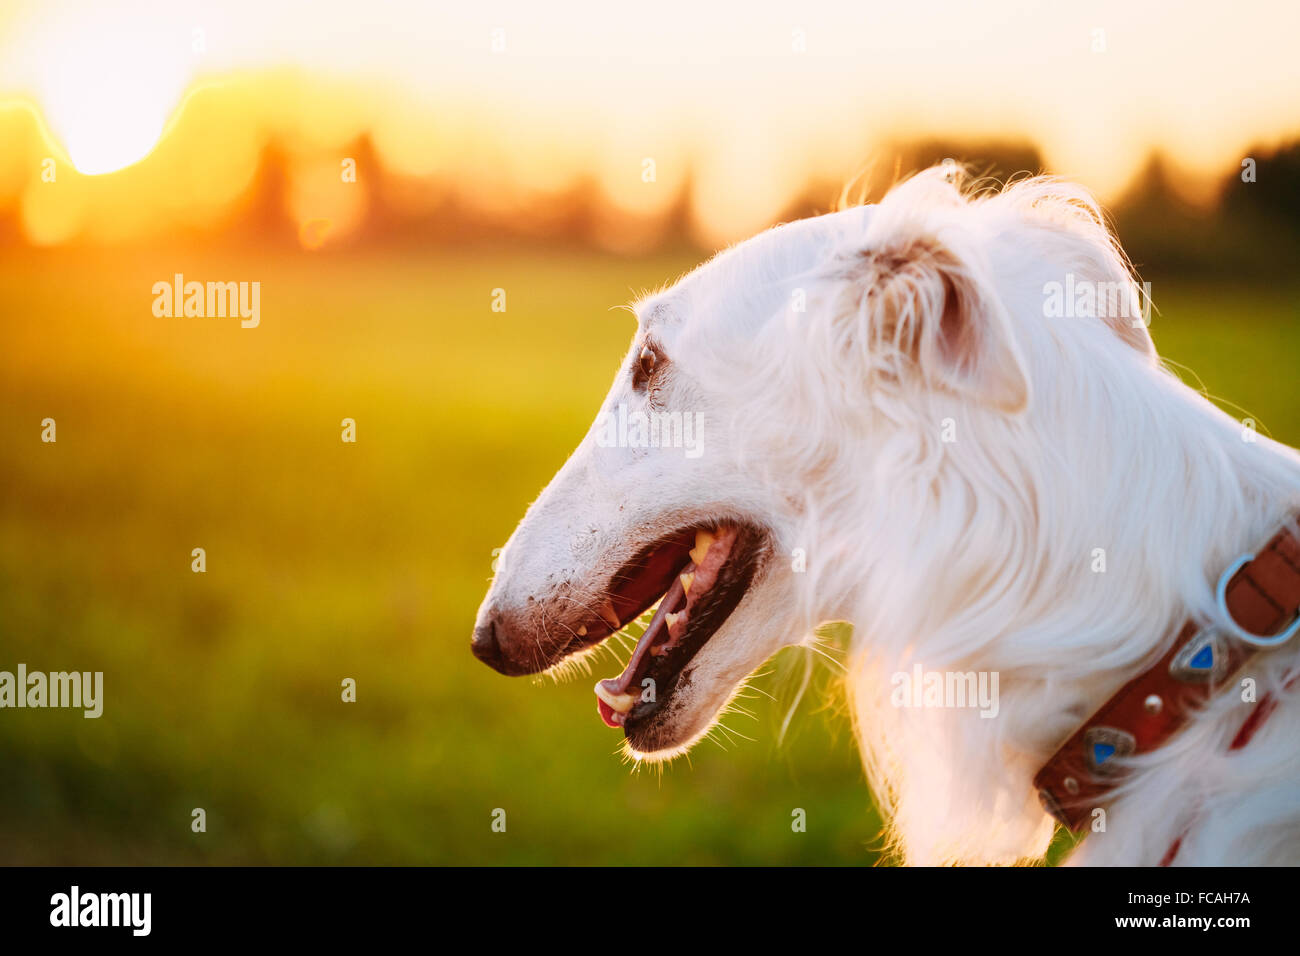 Close up White Russian Dog, Borzoi in Summer Evening, Sunset Sunrise Stock Photo